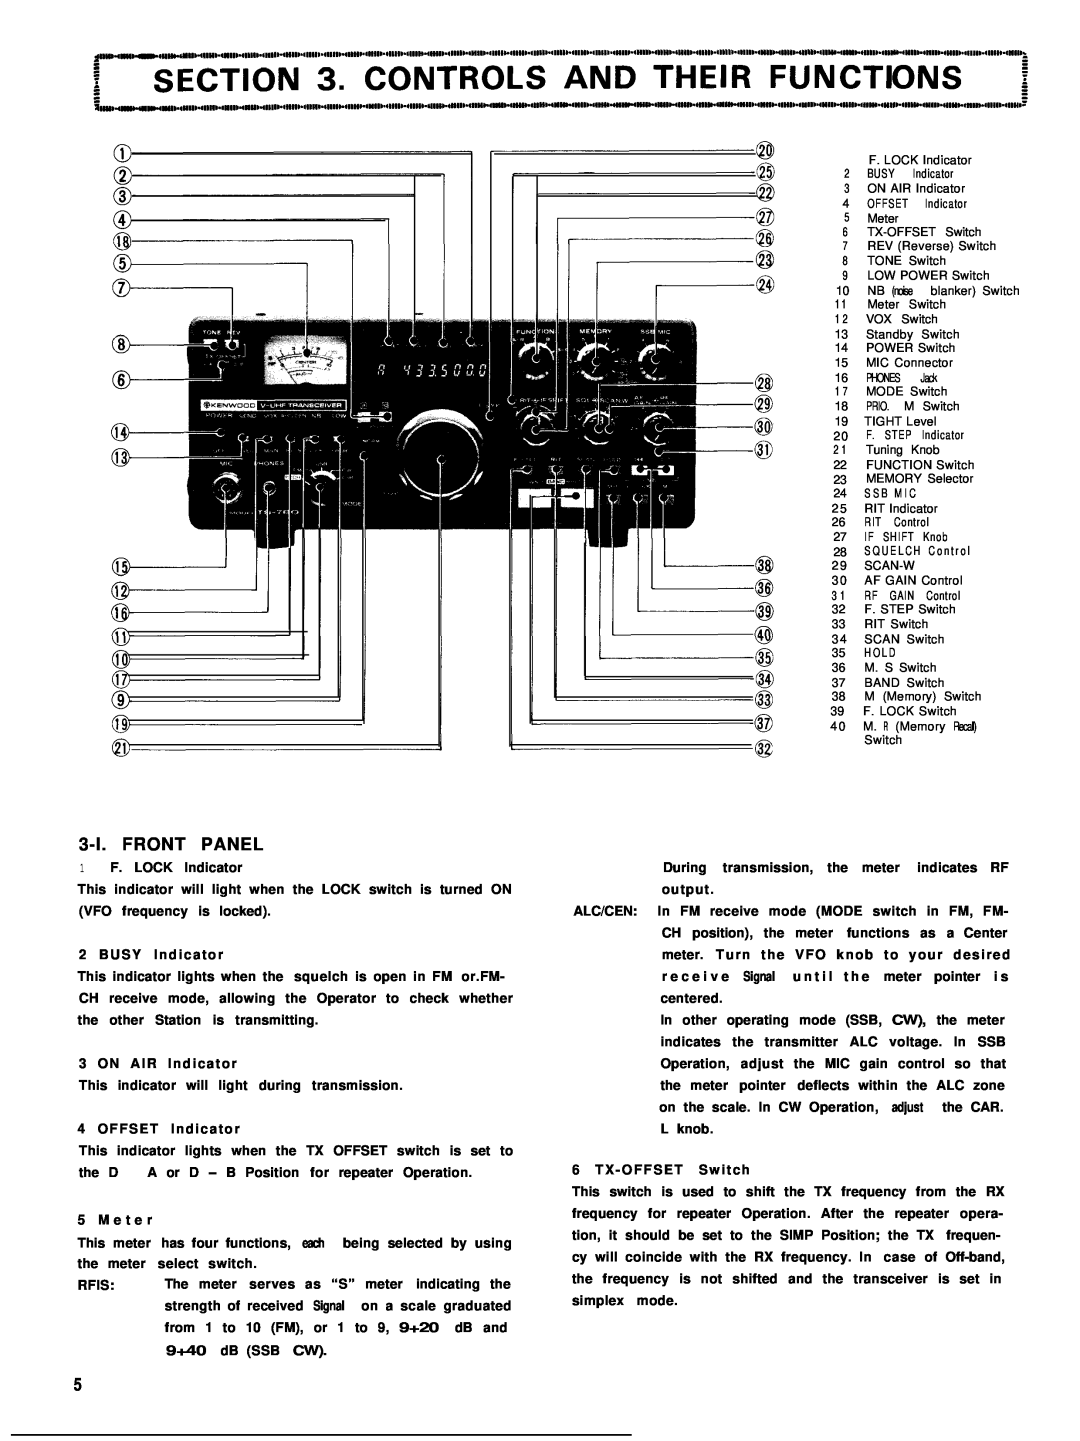 Kenwood TS-780 manual 3-l.FRONT PANEL 